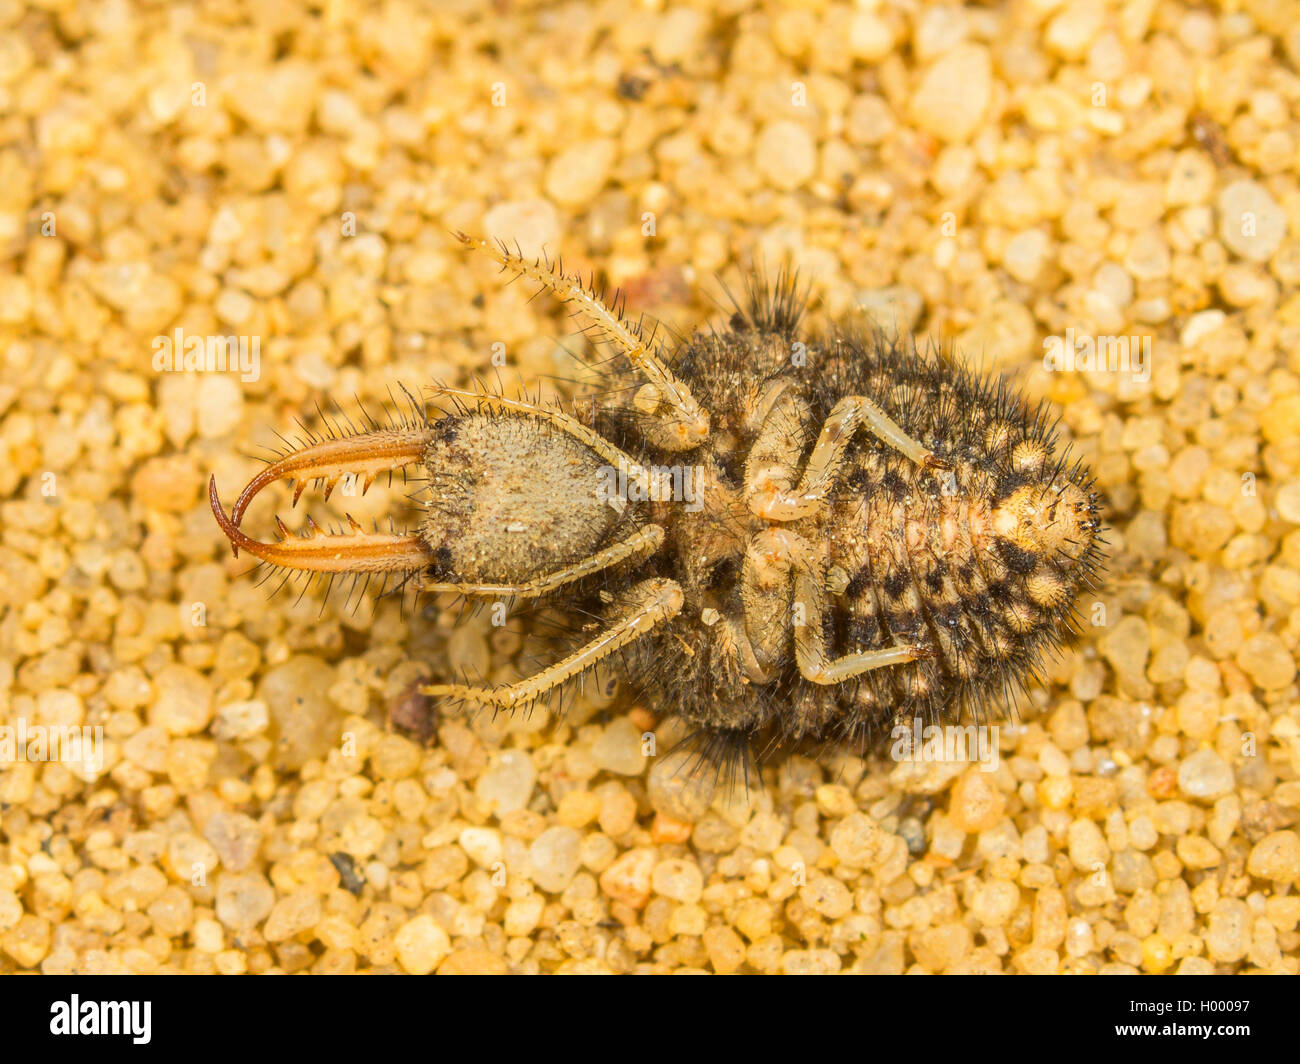 European antlion (Euroleon nostras), Mature larva laying on back side, Germany Stock Photo